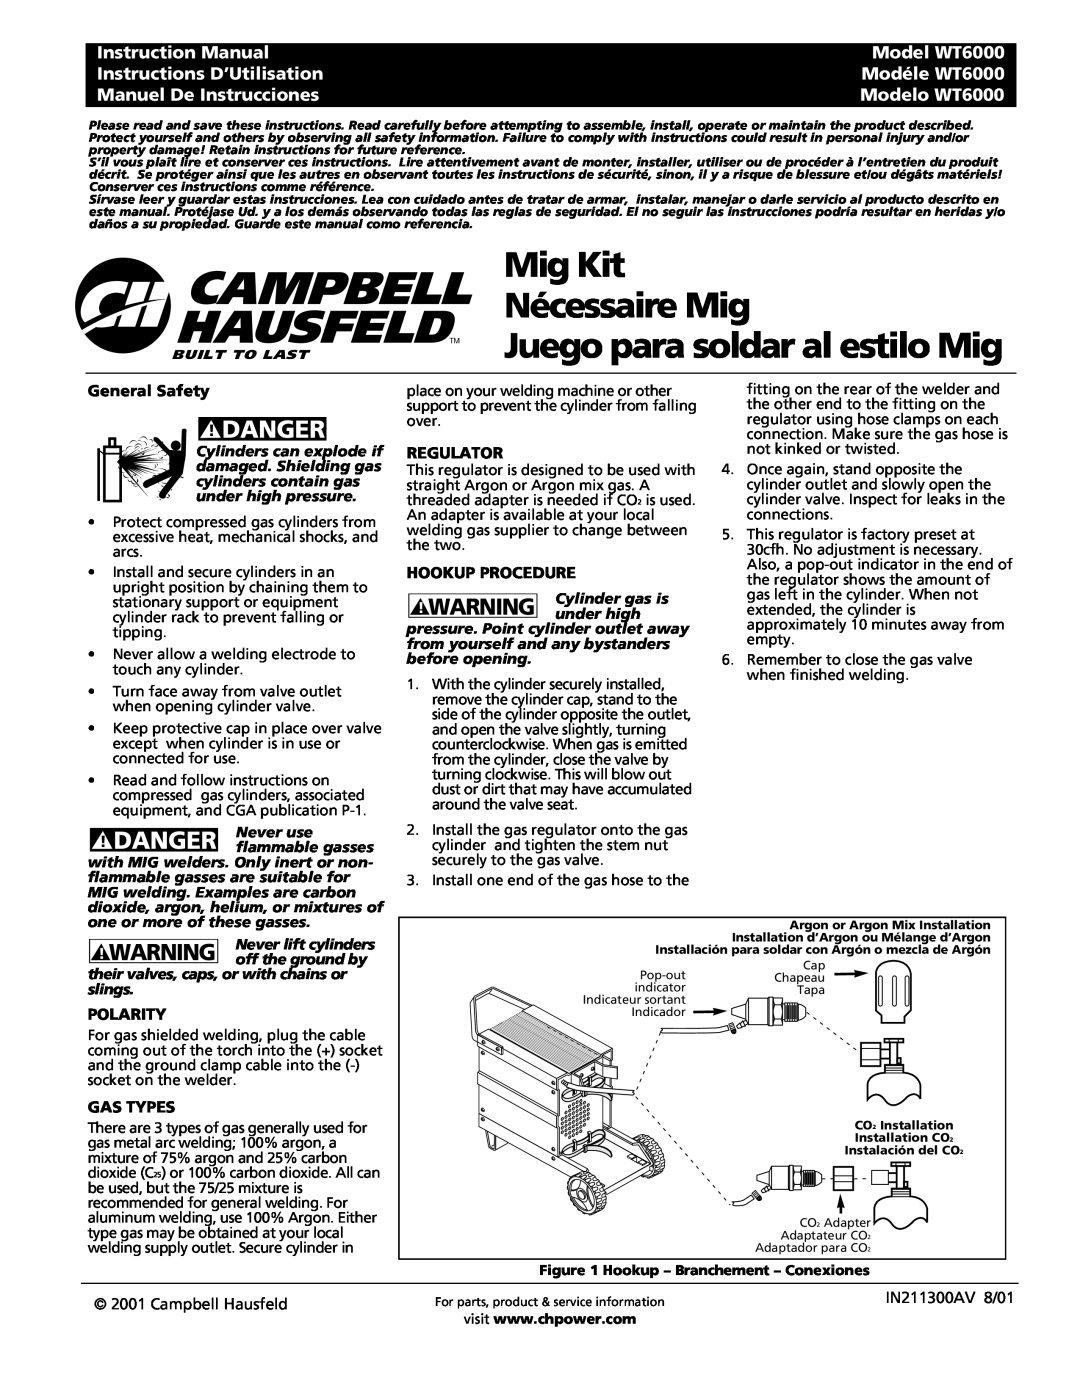 Campbell Hausfeld WT6000 instruction manual General Safety, Regulator, Hookup Procedure, Polarity, Gas Types, Mig Kit 